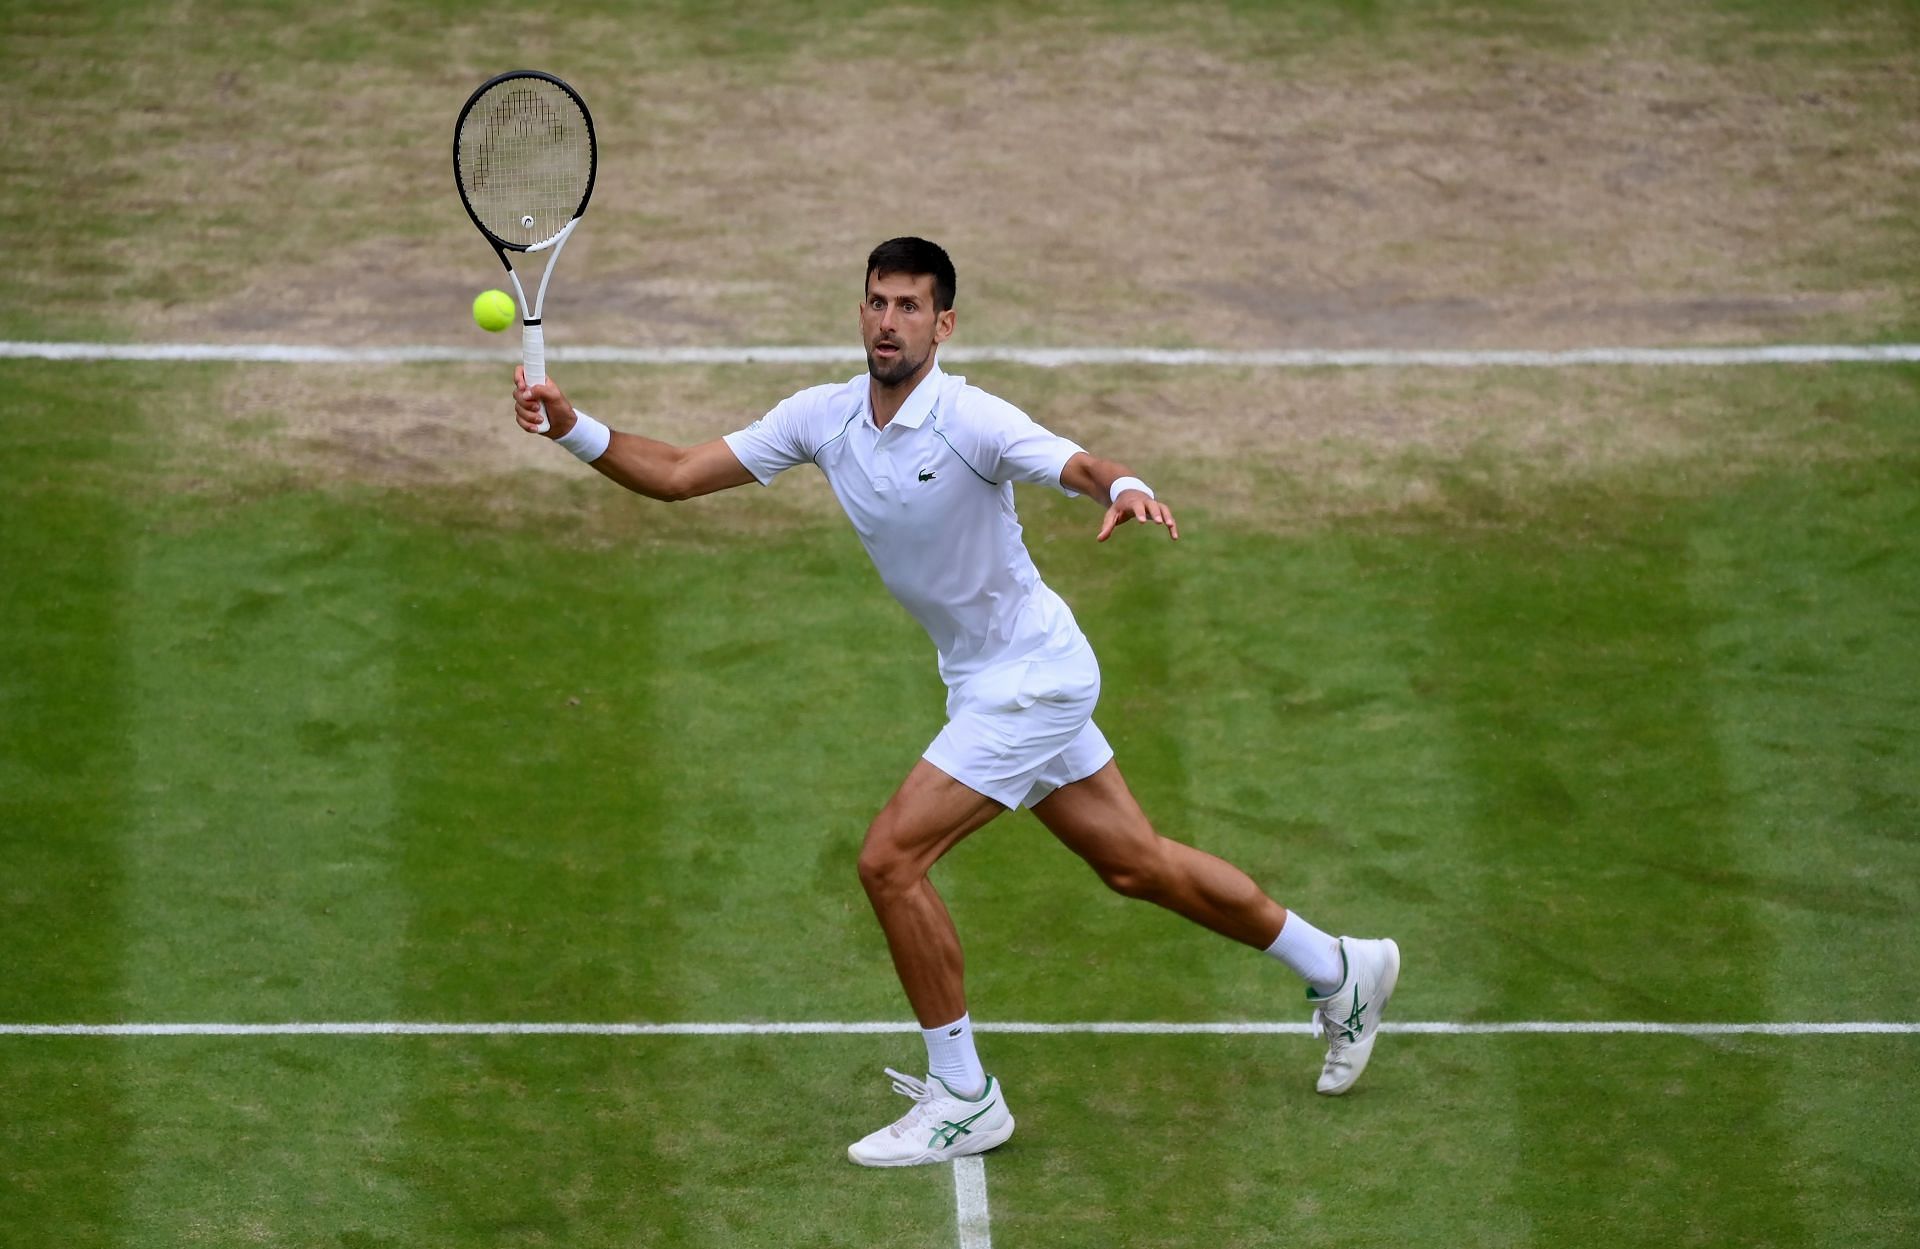 Novak Djokovic will take on Nick Kyrgios in the final at Wimbledon if he beats Cameron Norrie